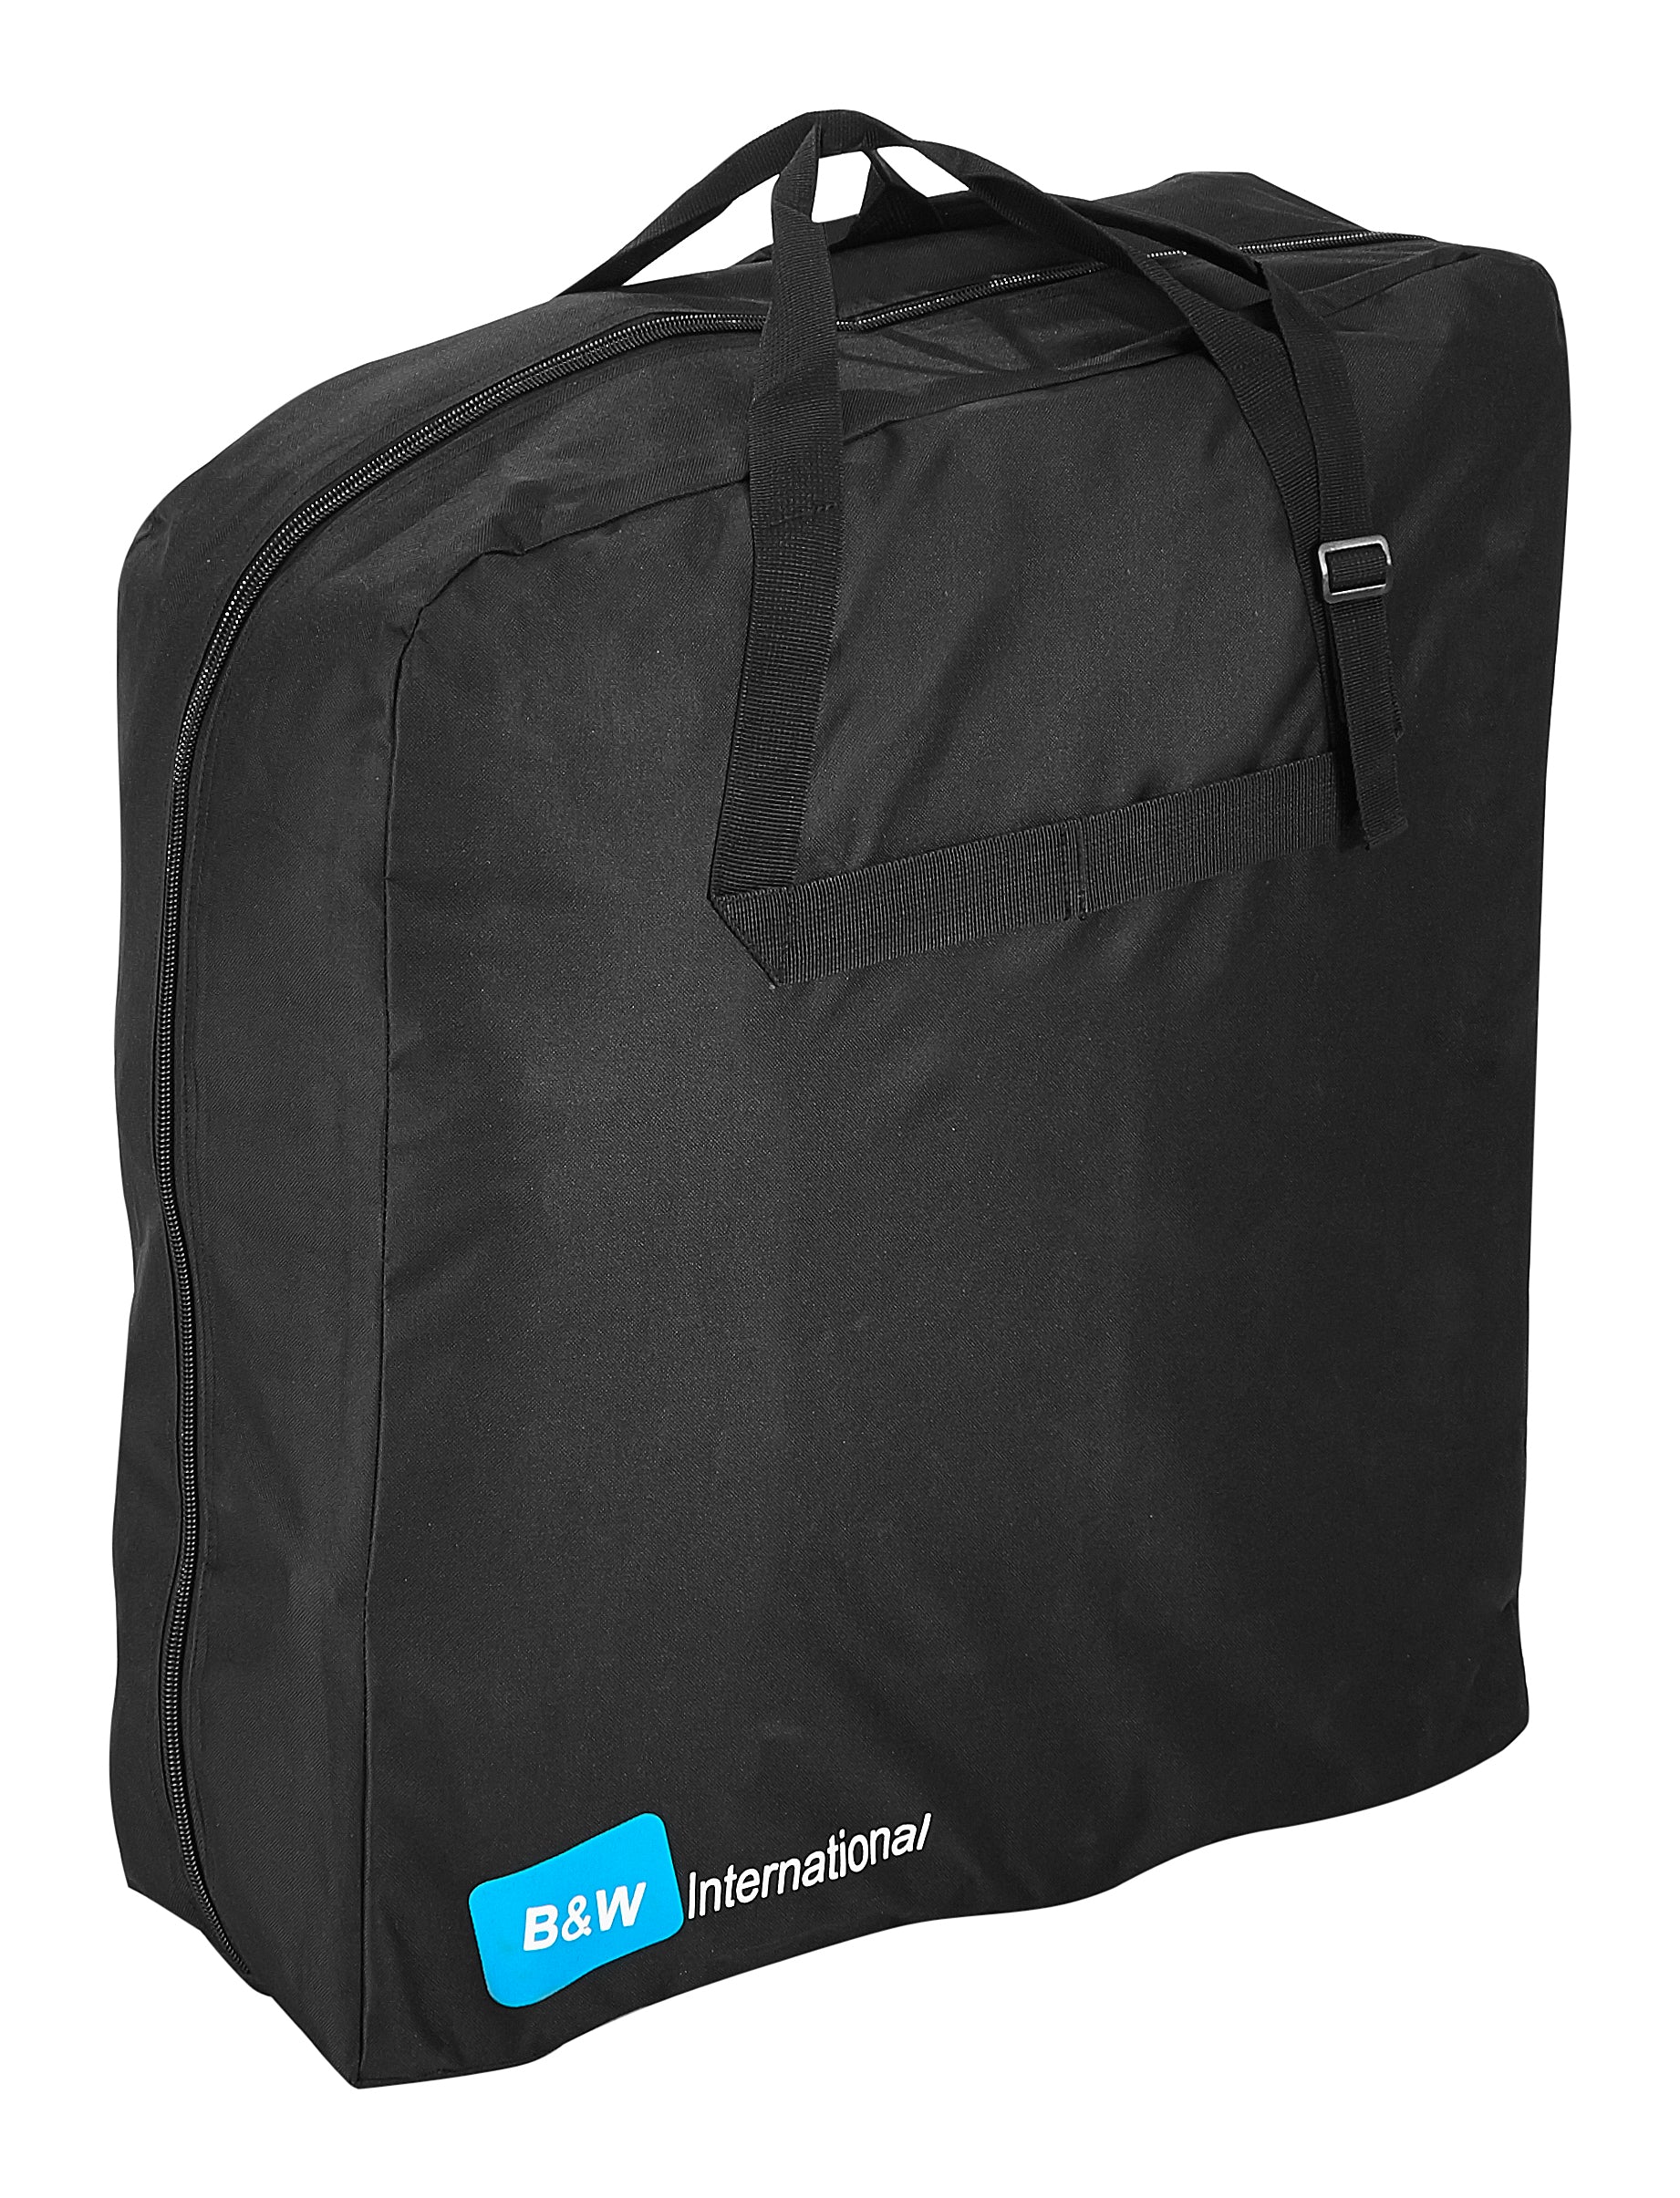 B&W International Foldon Bag 96007/N